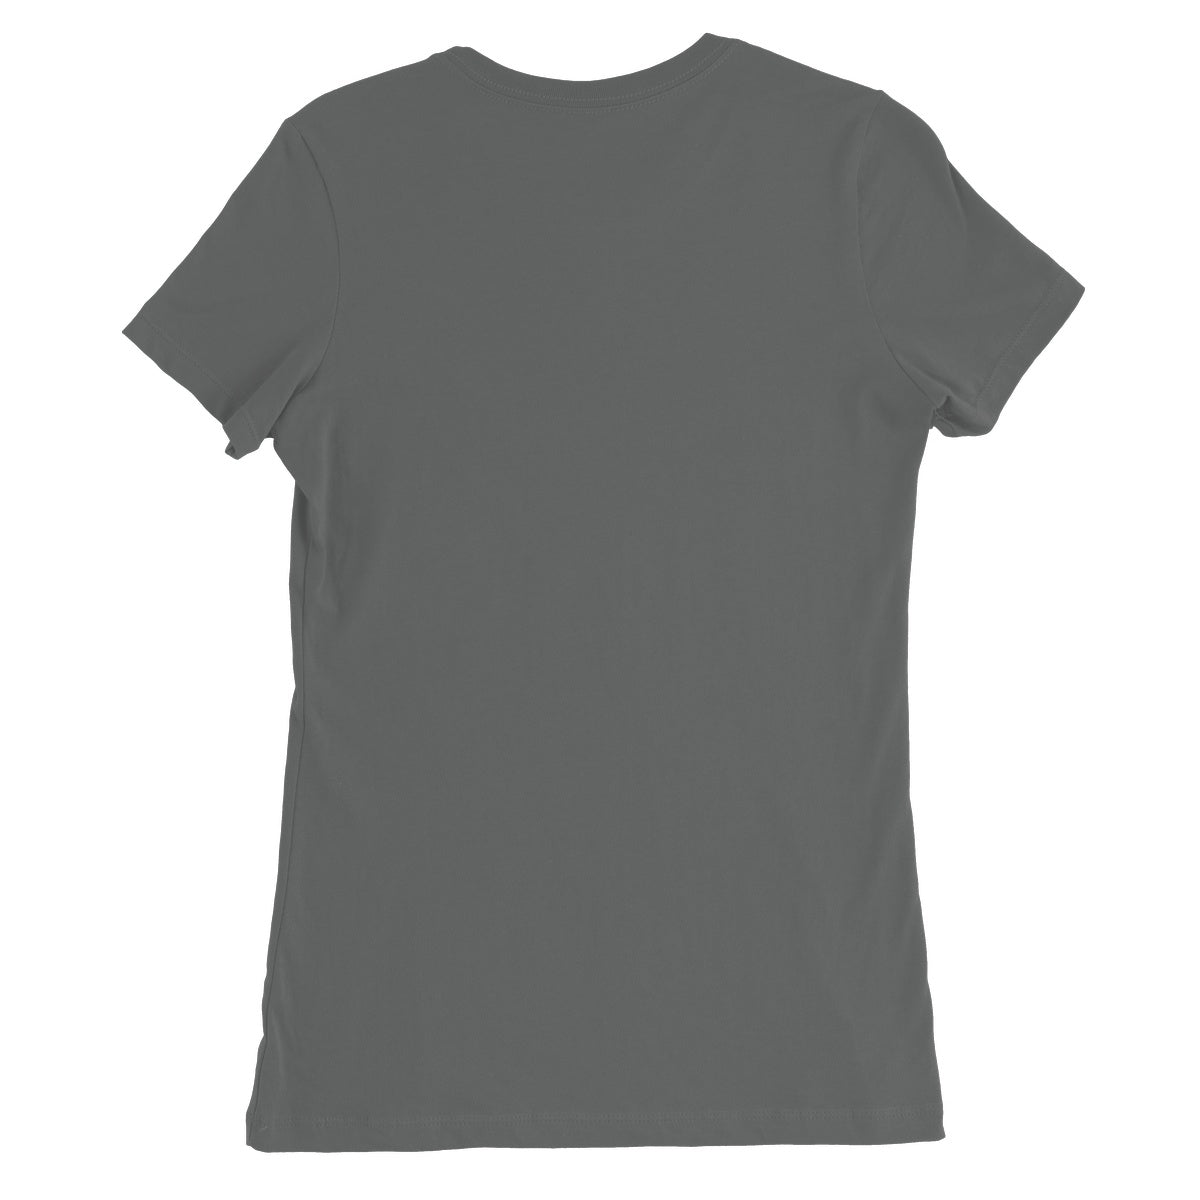 AQUA B&amp;W - 08 - Sea Star - Feines Jersey-T-Shirt für Frauen